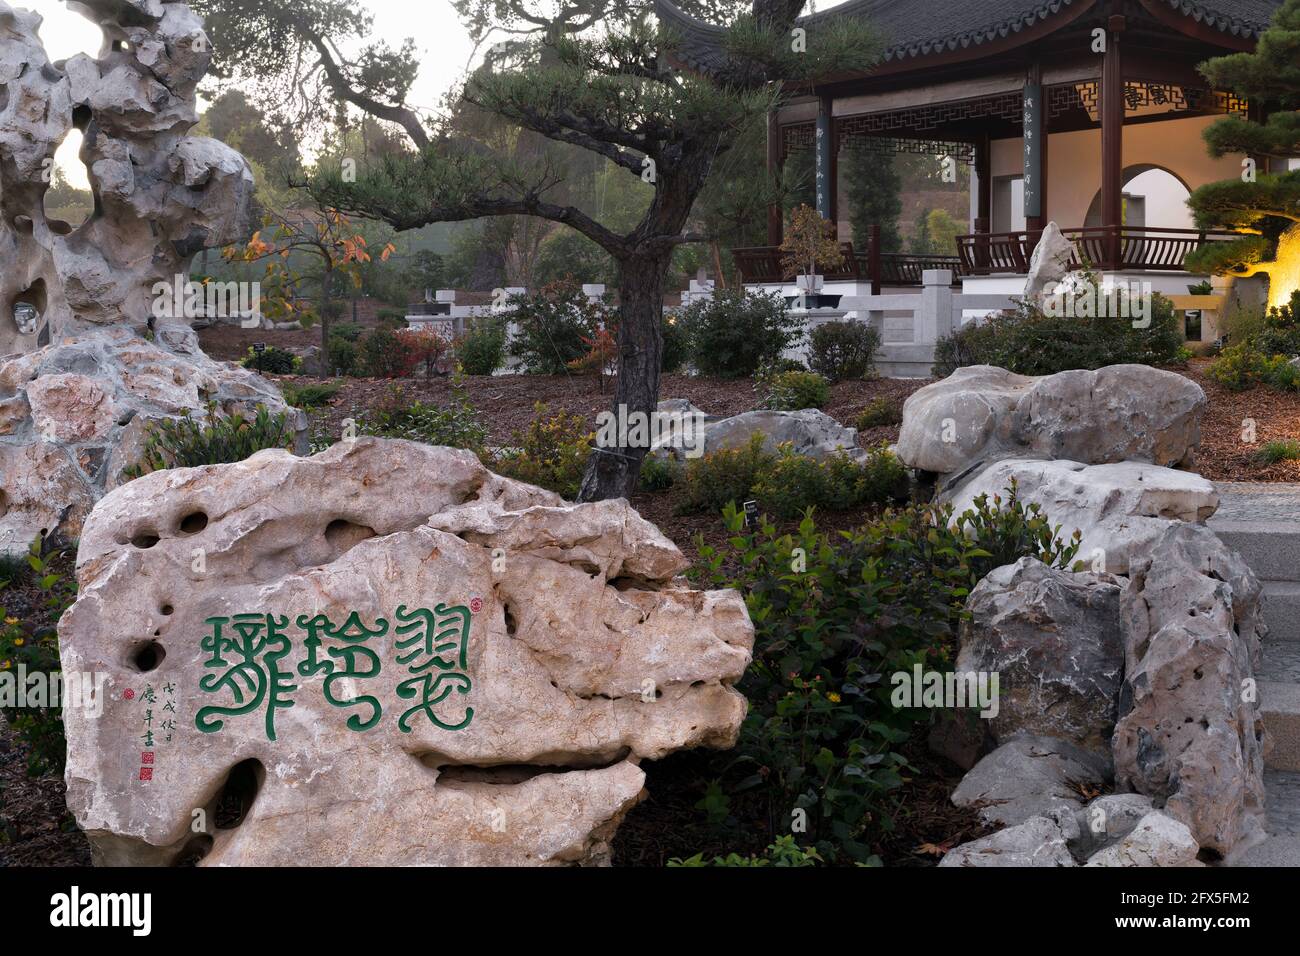 The Chinese Garden, Huntington Botanical Gardens, California, USA Stock Photo